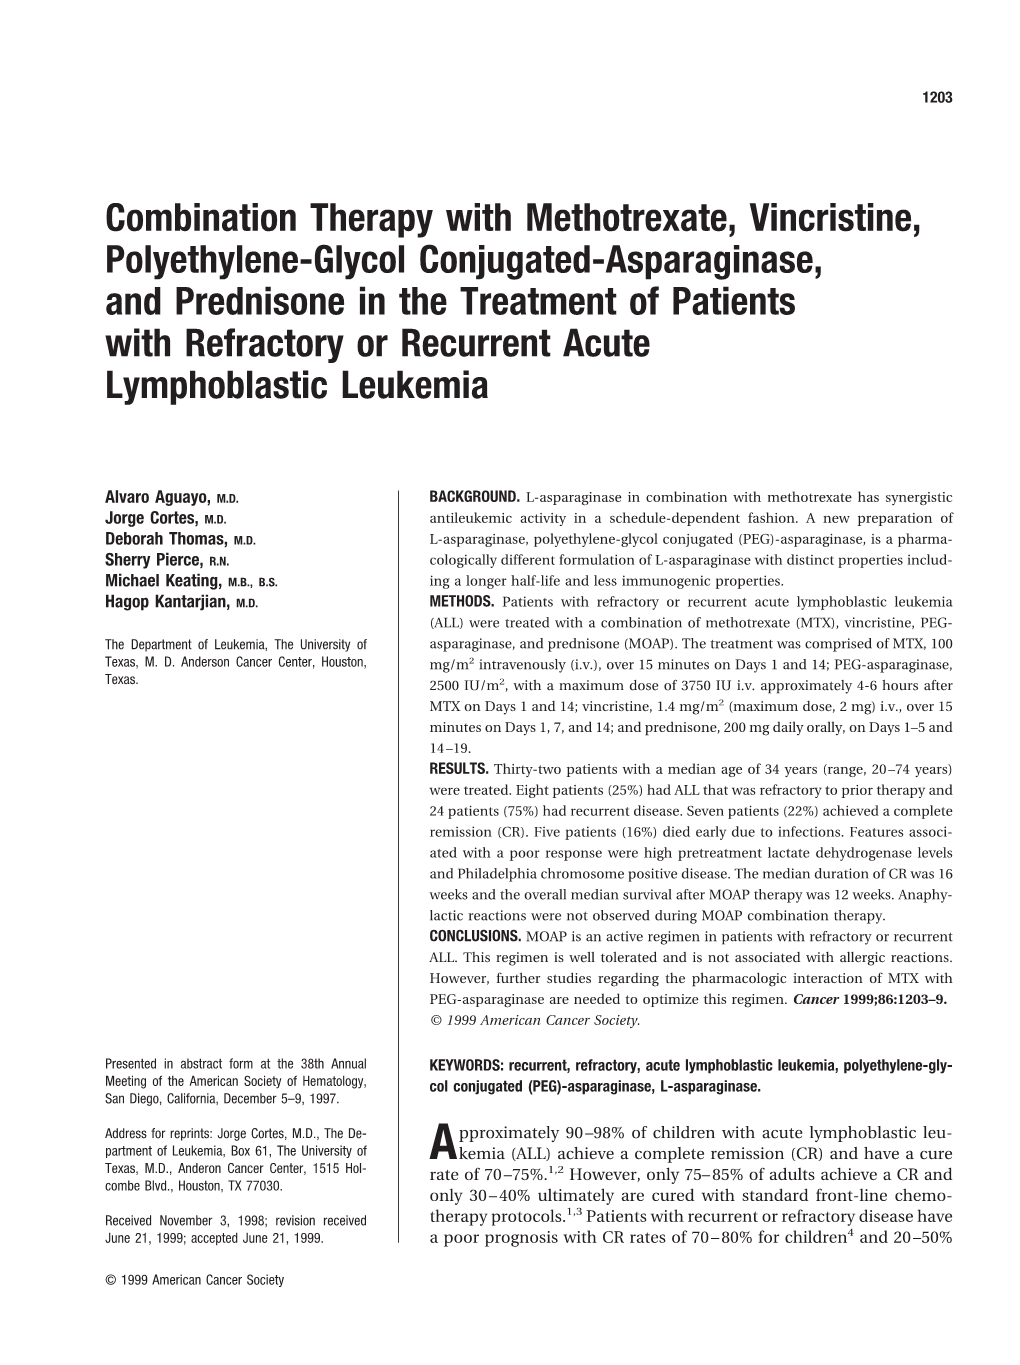 Combination Therapy with Methotrexate, Vincristine